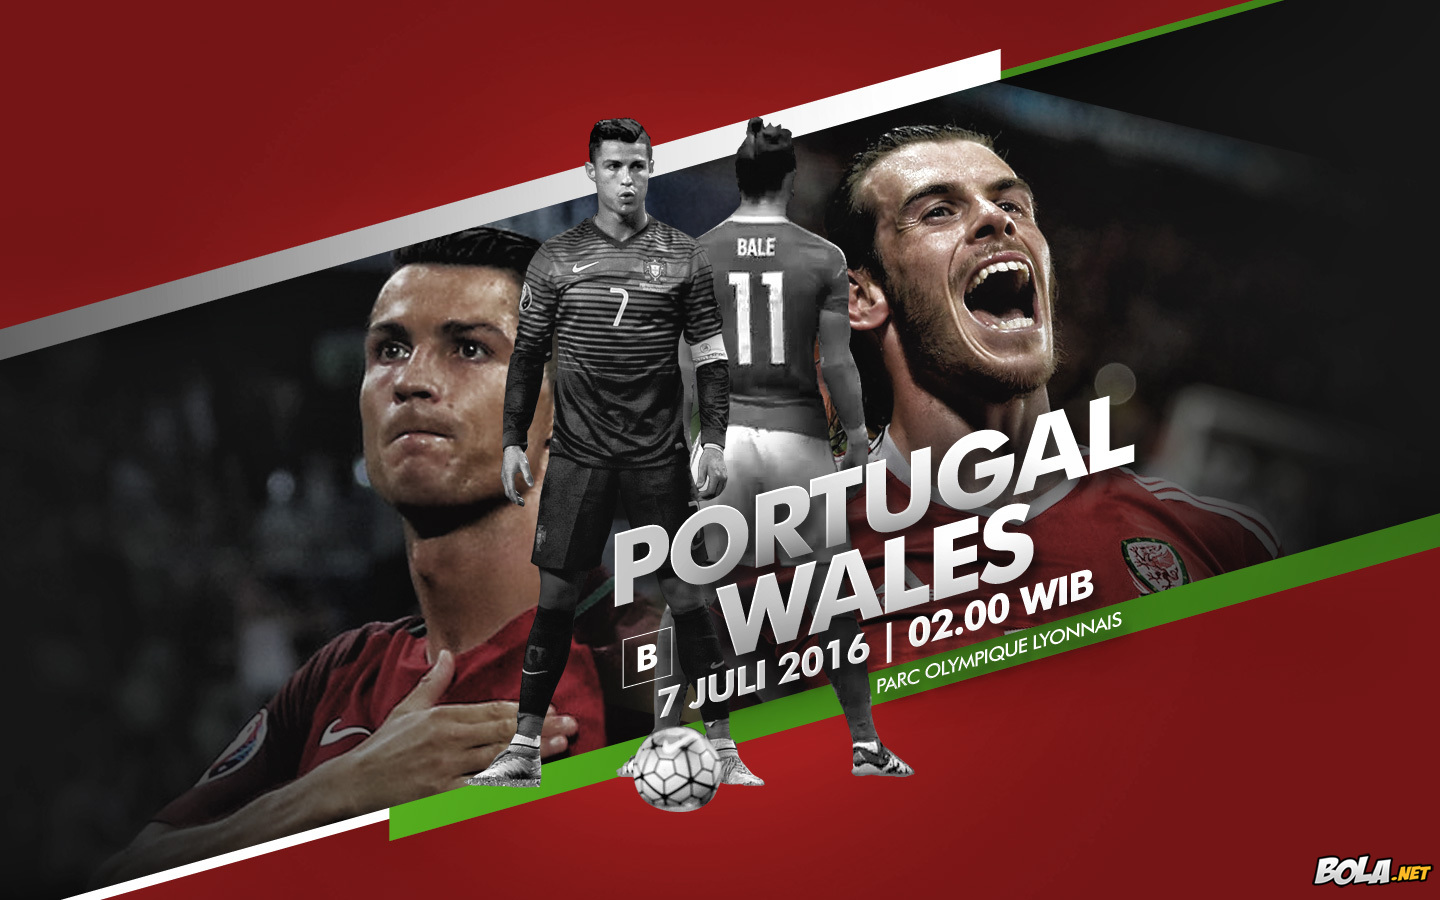 Deskripsi : Wallpaper Portugal Vs Wales, size: 1440x900